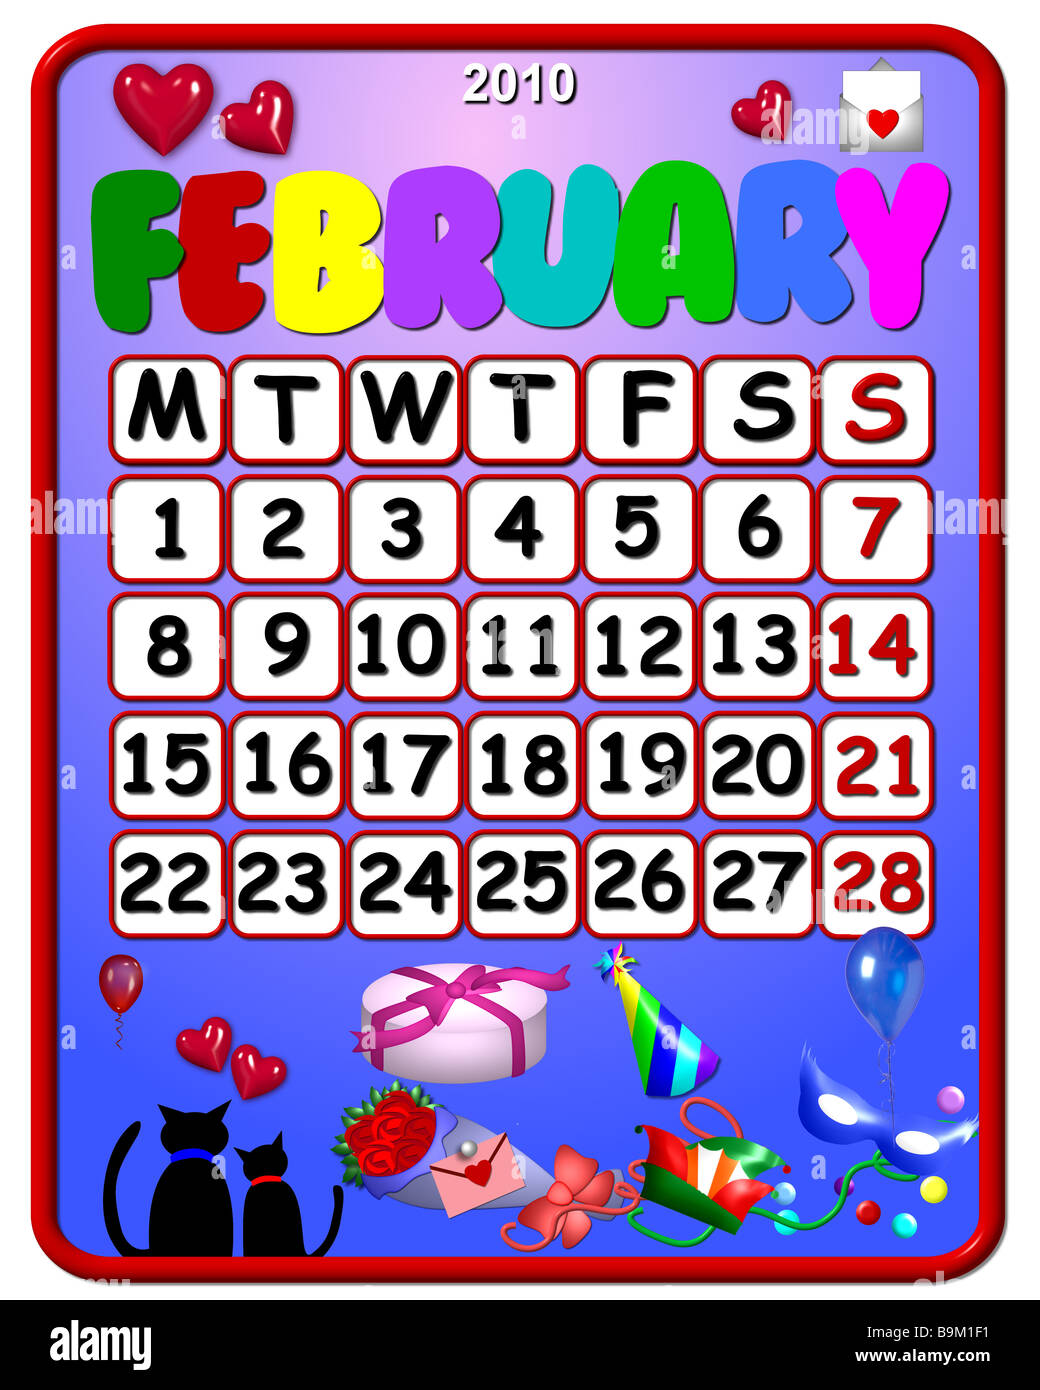 calendar february 2010 Stock Photo